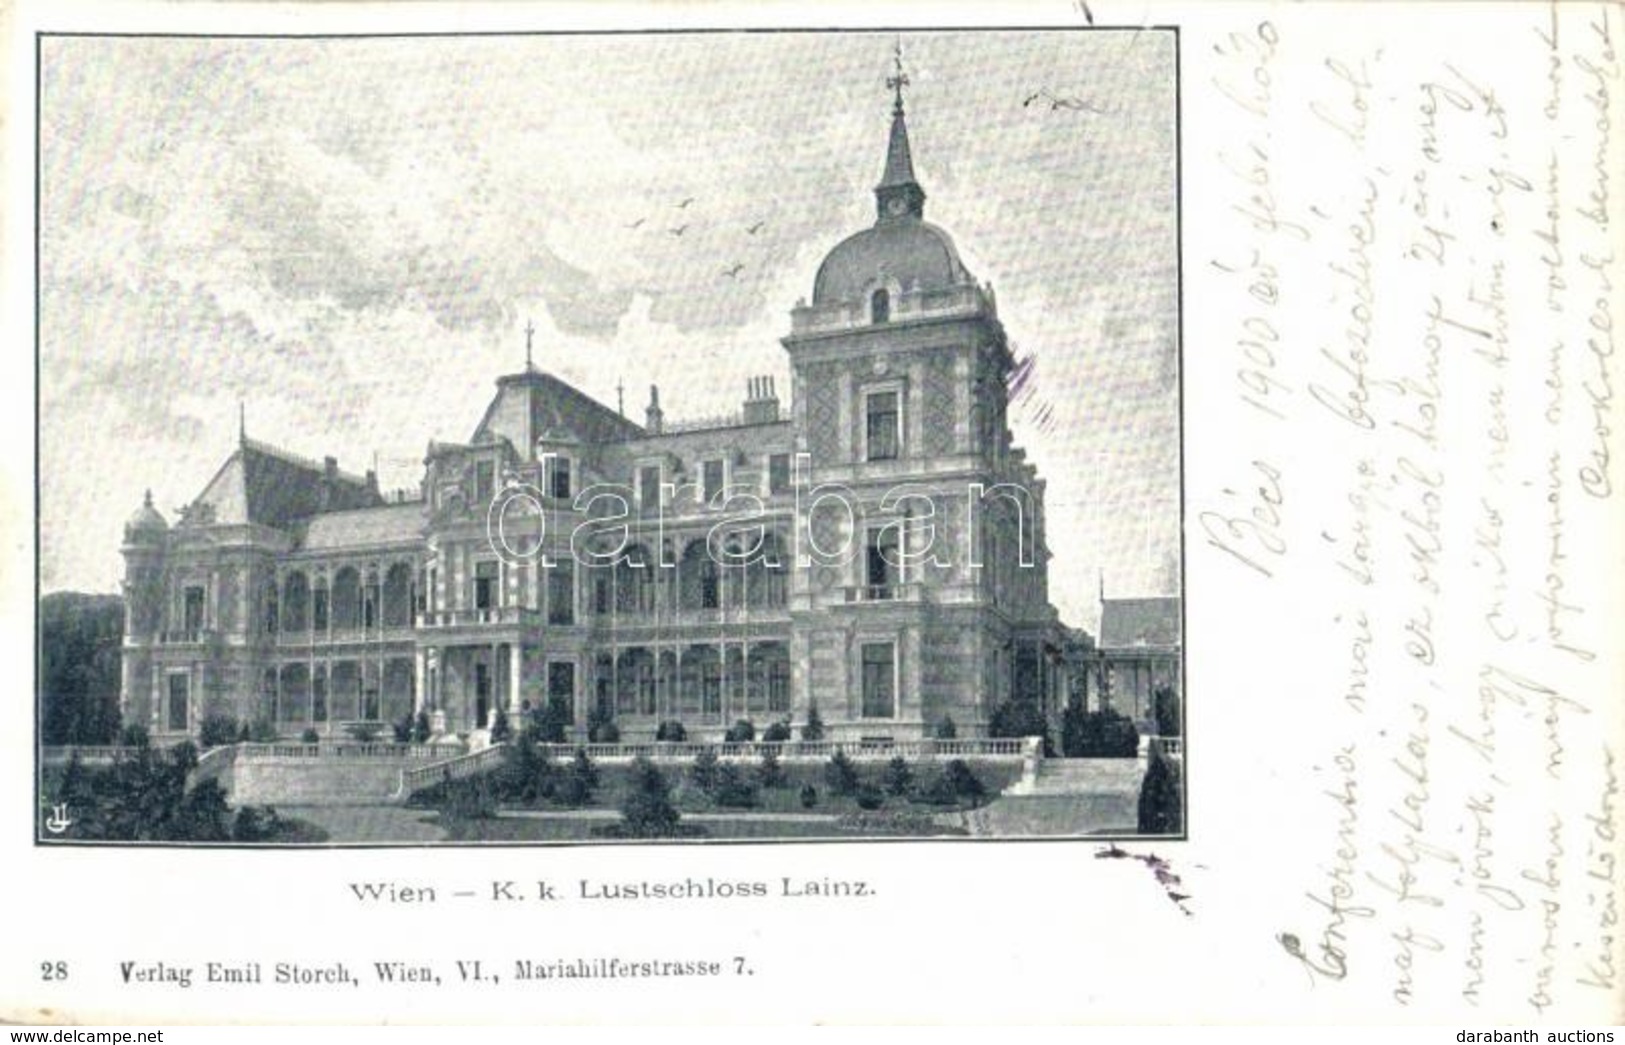 T2 1900 Vienna, Wien XIII. K. K. Lustschloss Lainz / Hermesvilla, Palace. Verlag Emil Storch 28. - Unclassified